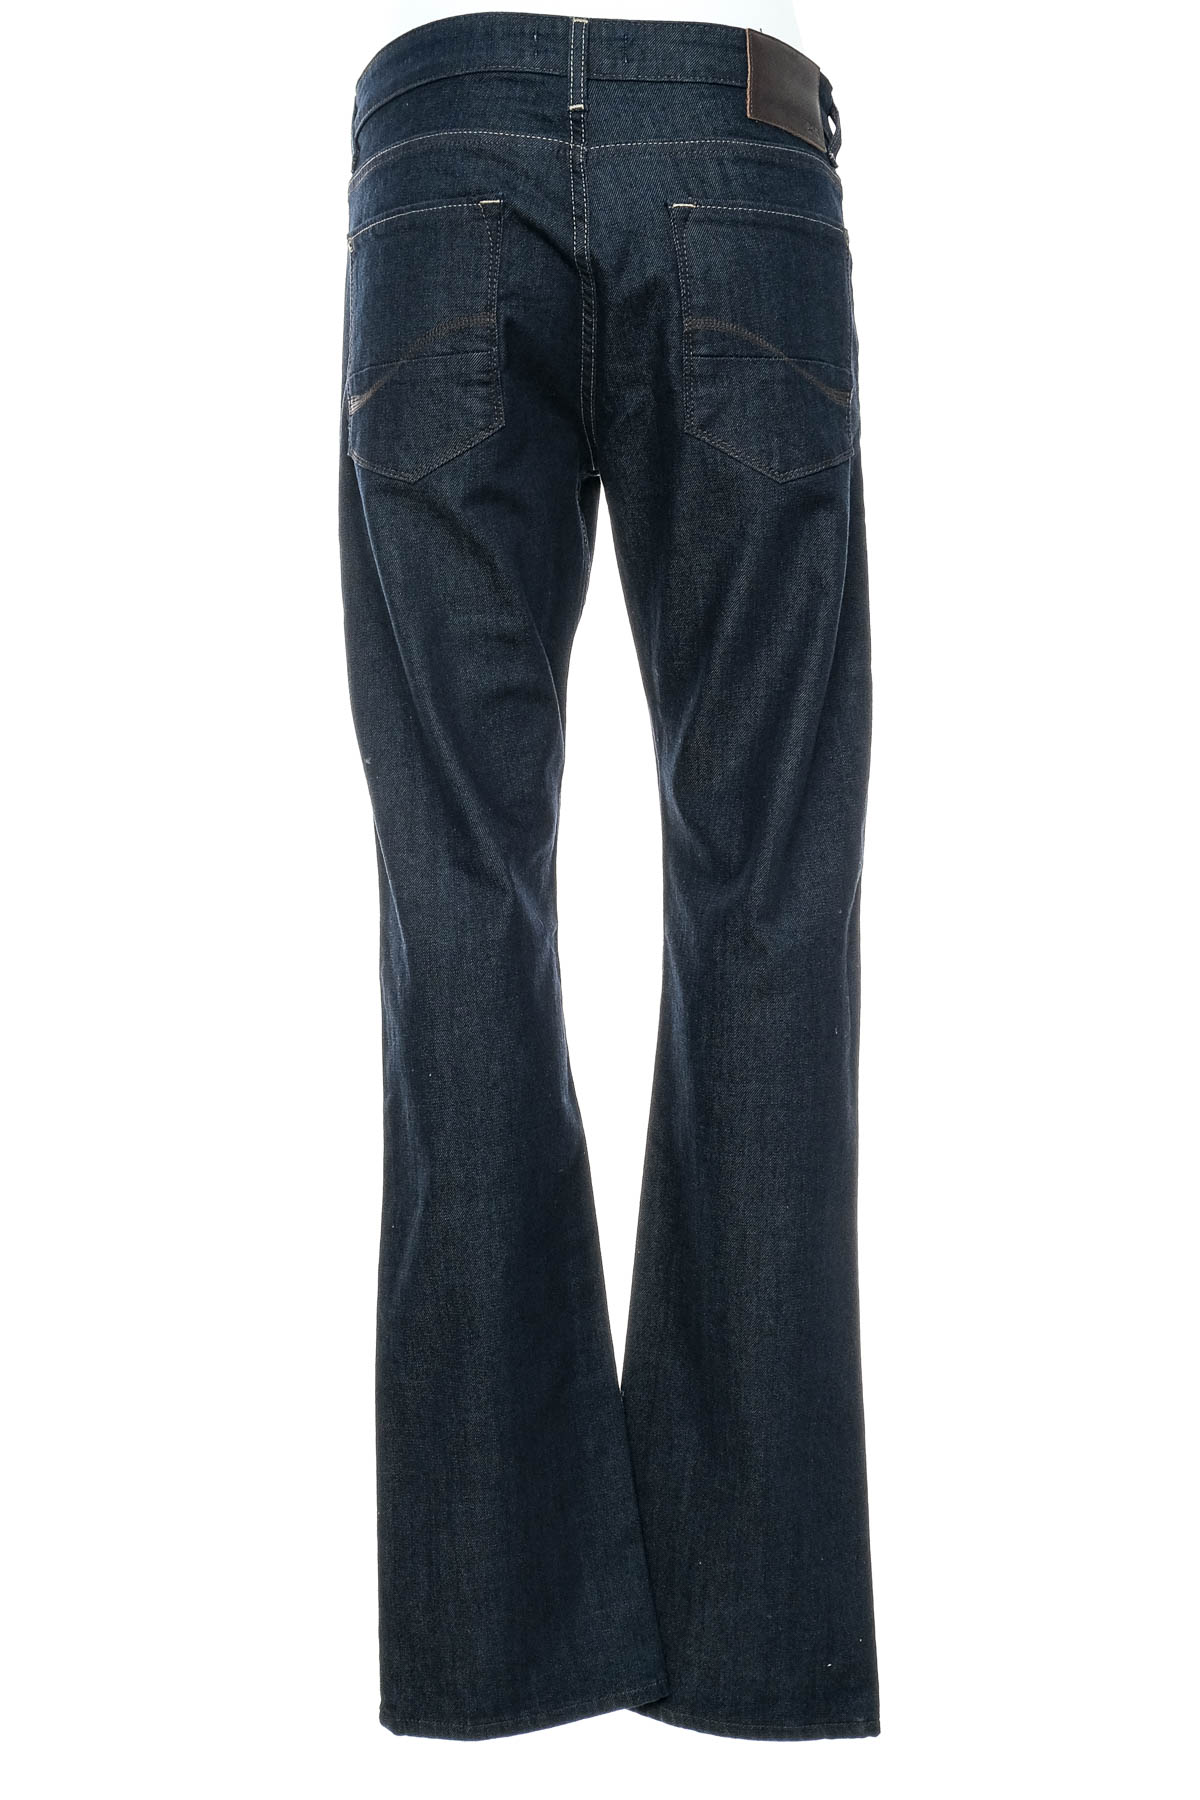 Men's jeans - Celio* - 1